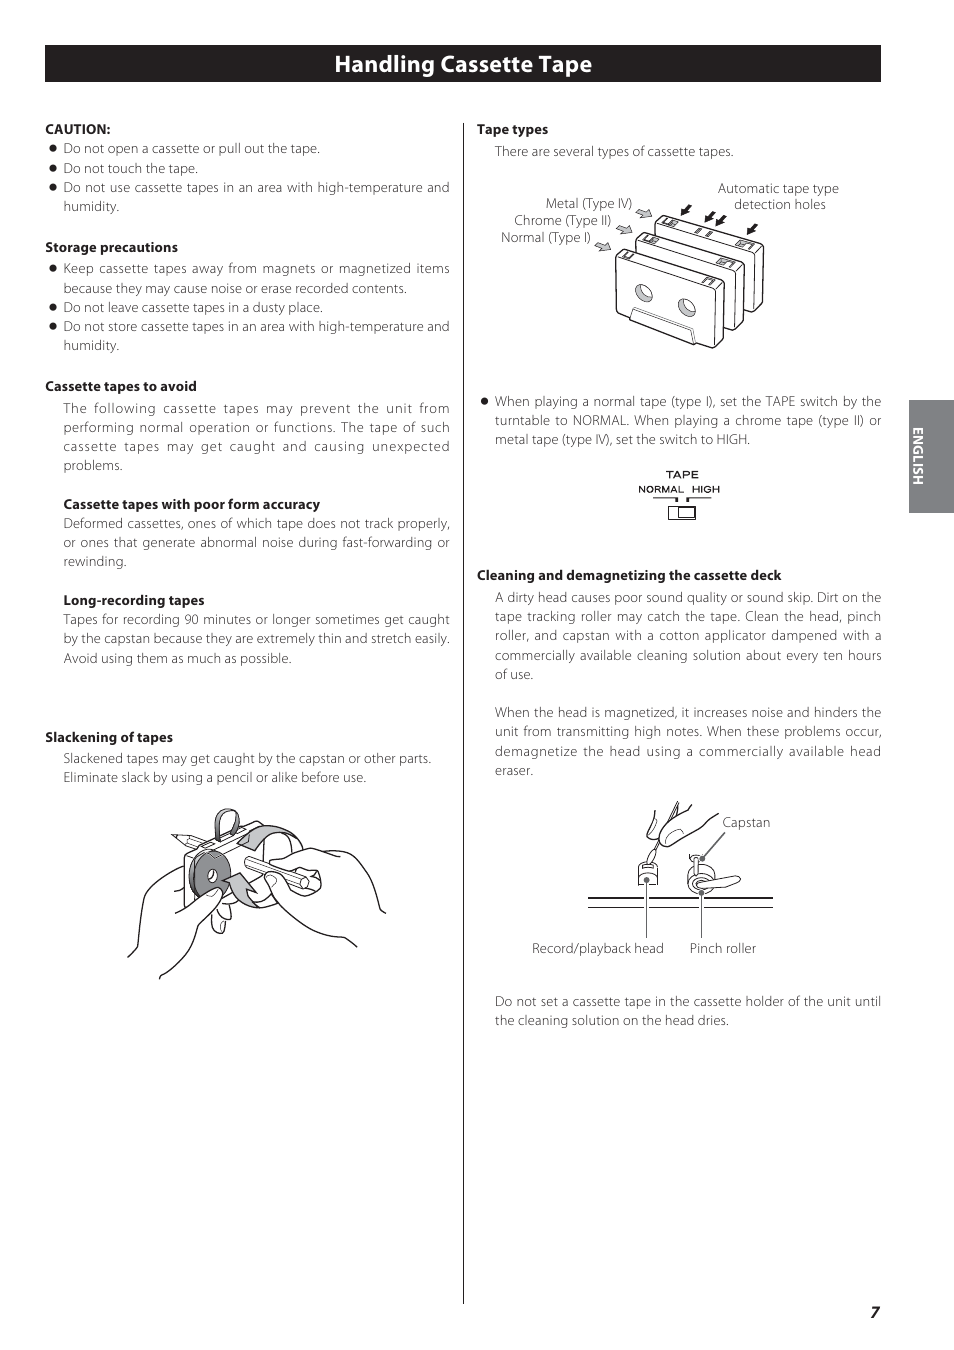 Handling cassette tape | Teac GF-550 User Manual | Page 7 / 96